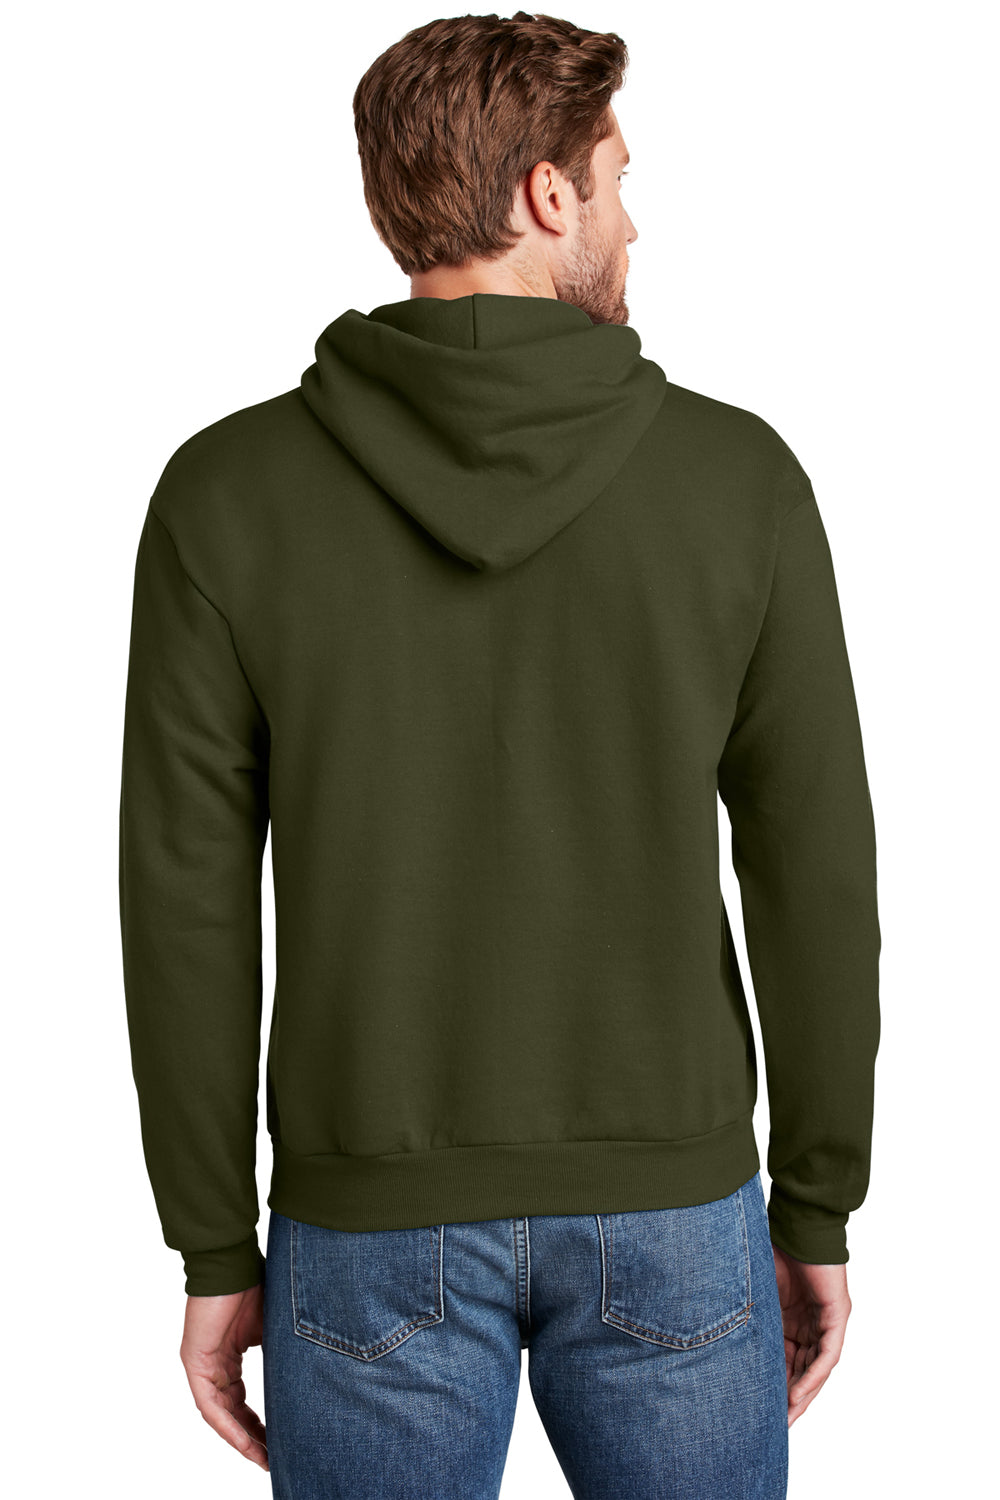 Hanes P170 Mens EcoSmart Print Pro XP Hooded Sweatshirt Hoodie Fatigue Green Back